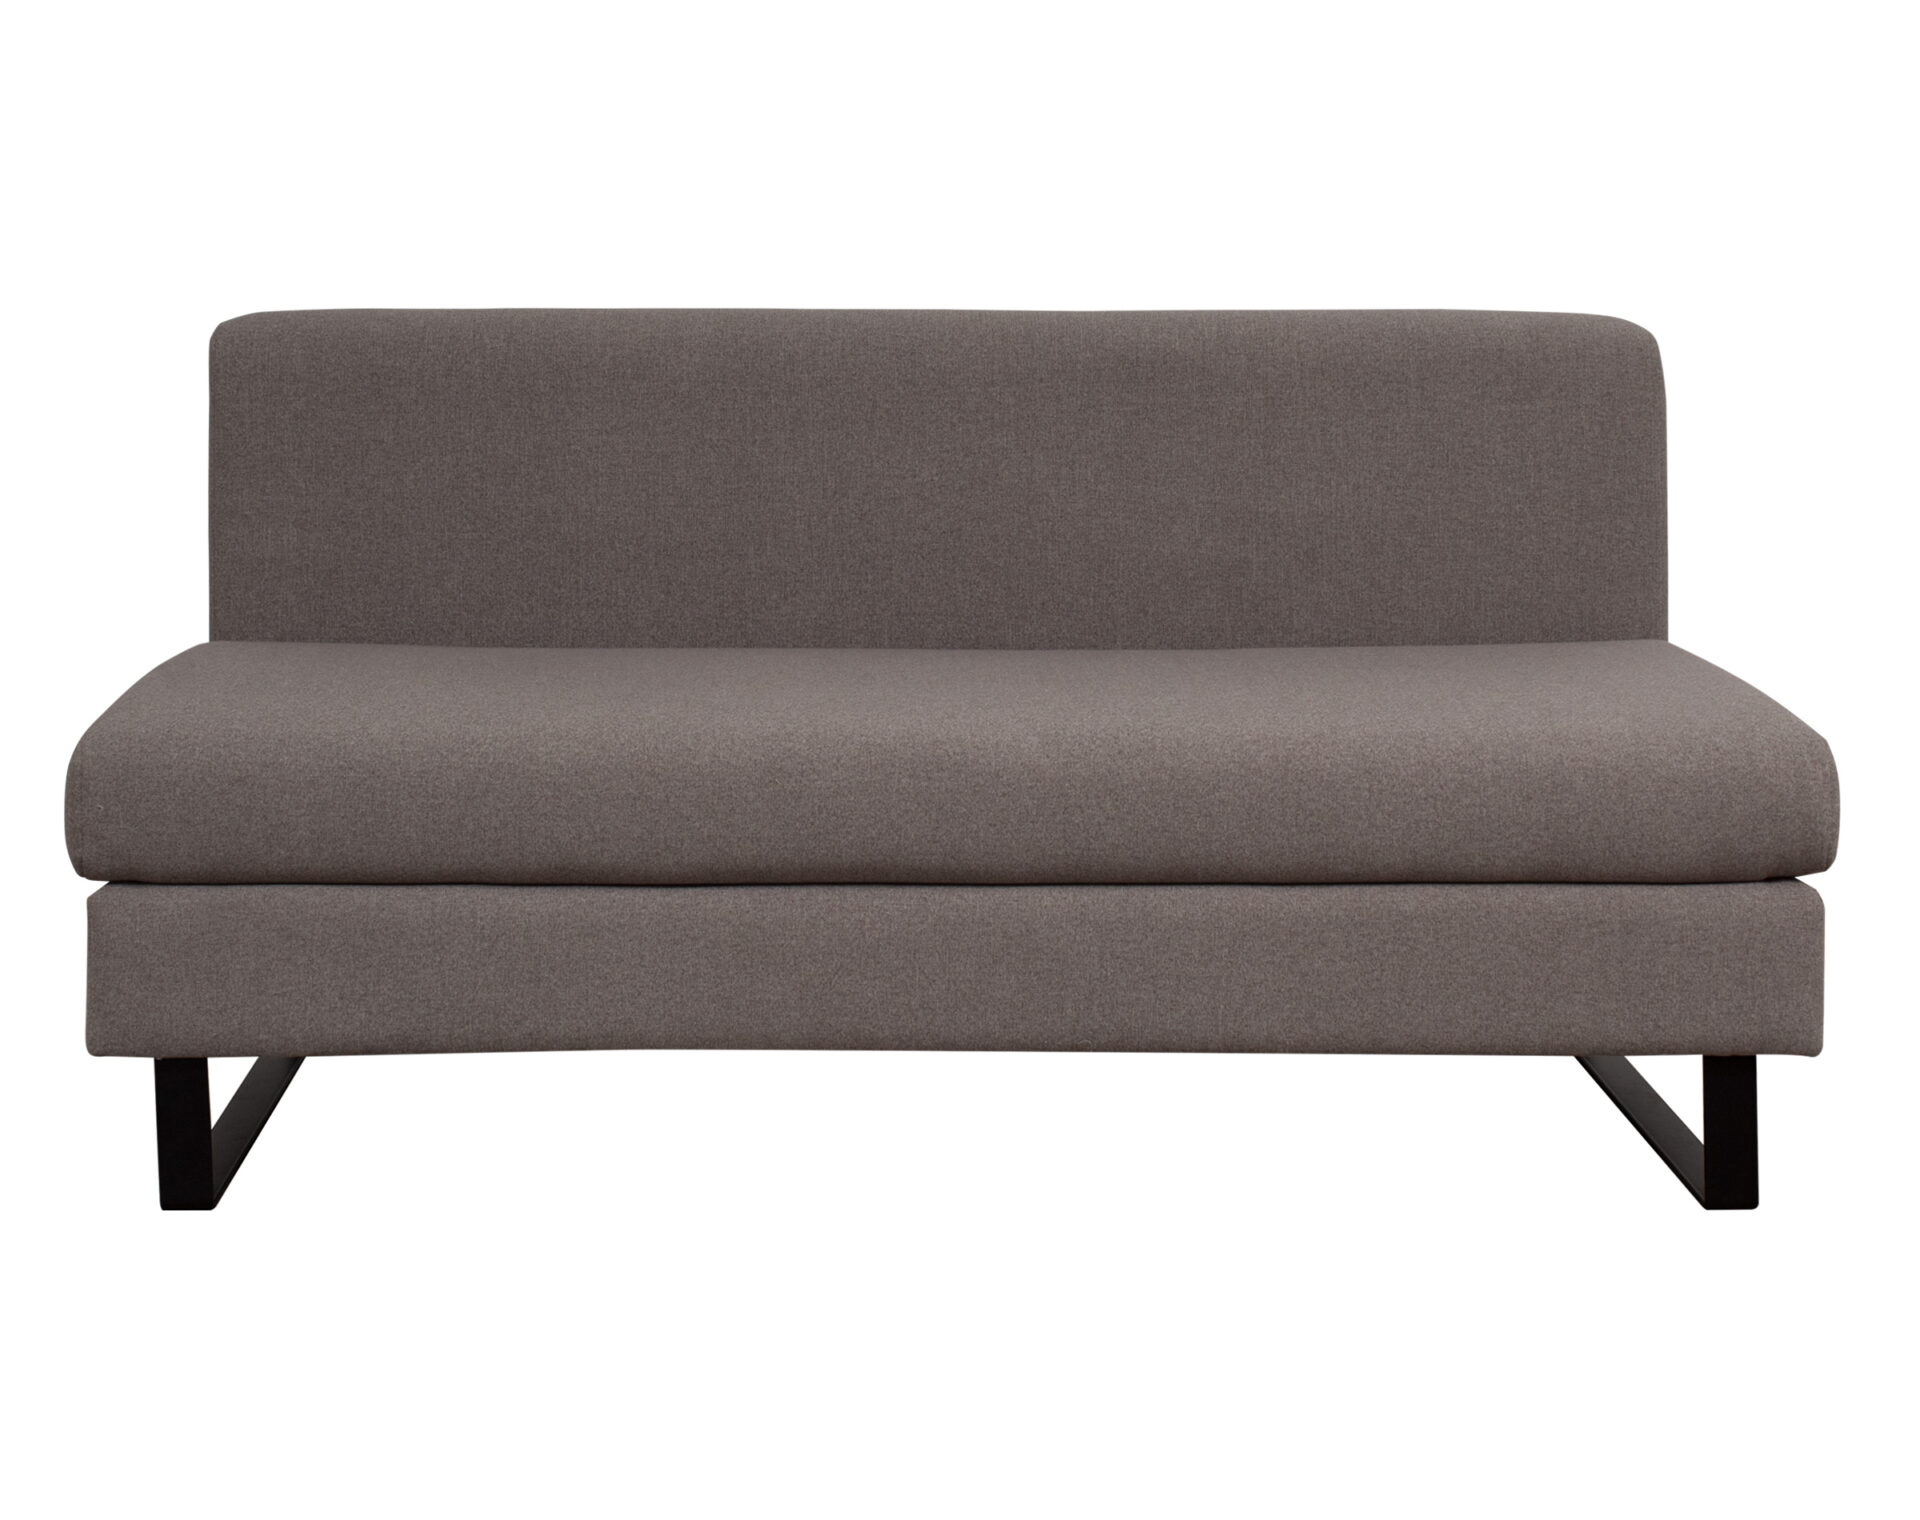 sofa empresa asiento pegado tela vv27 y zocalo metalico negro frente